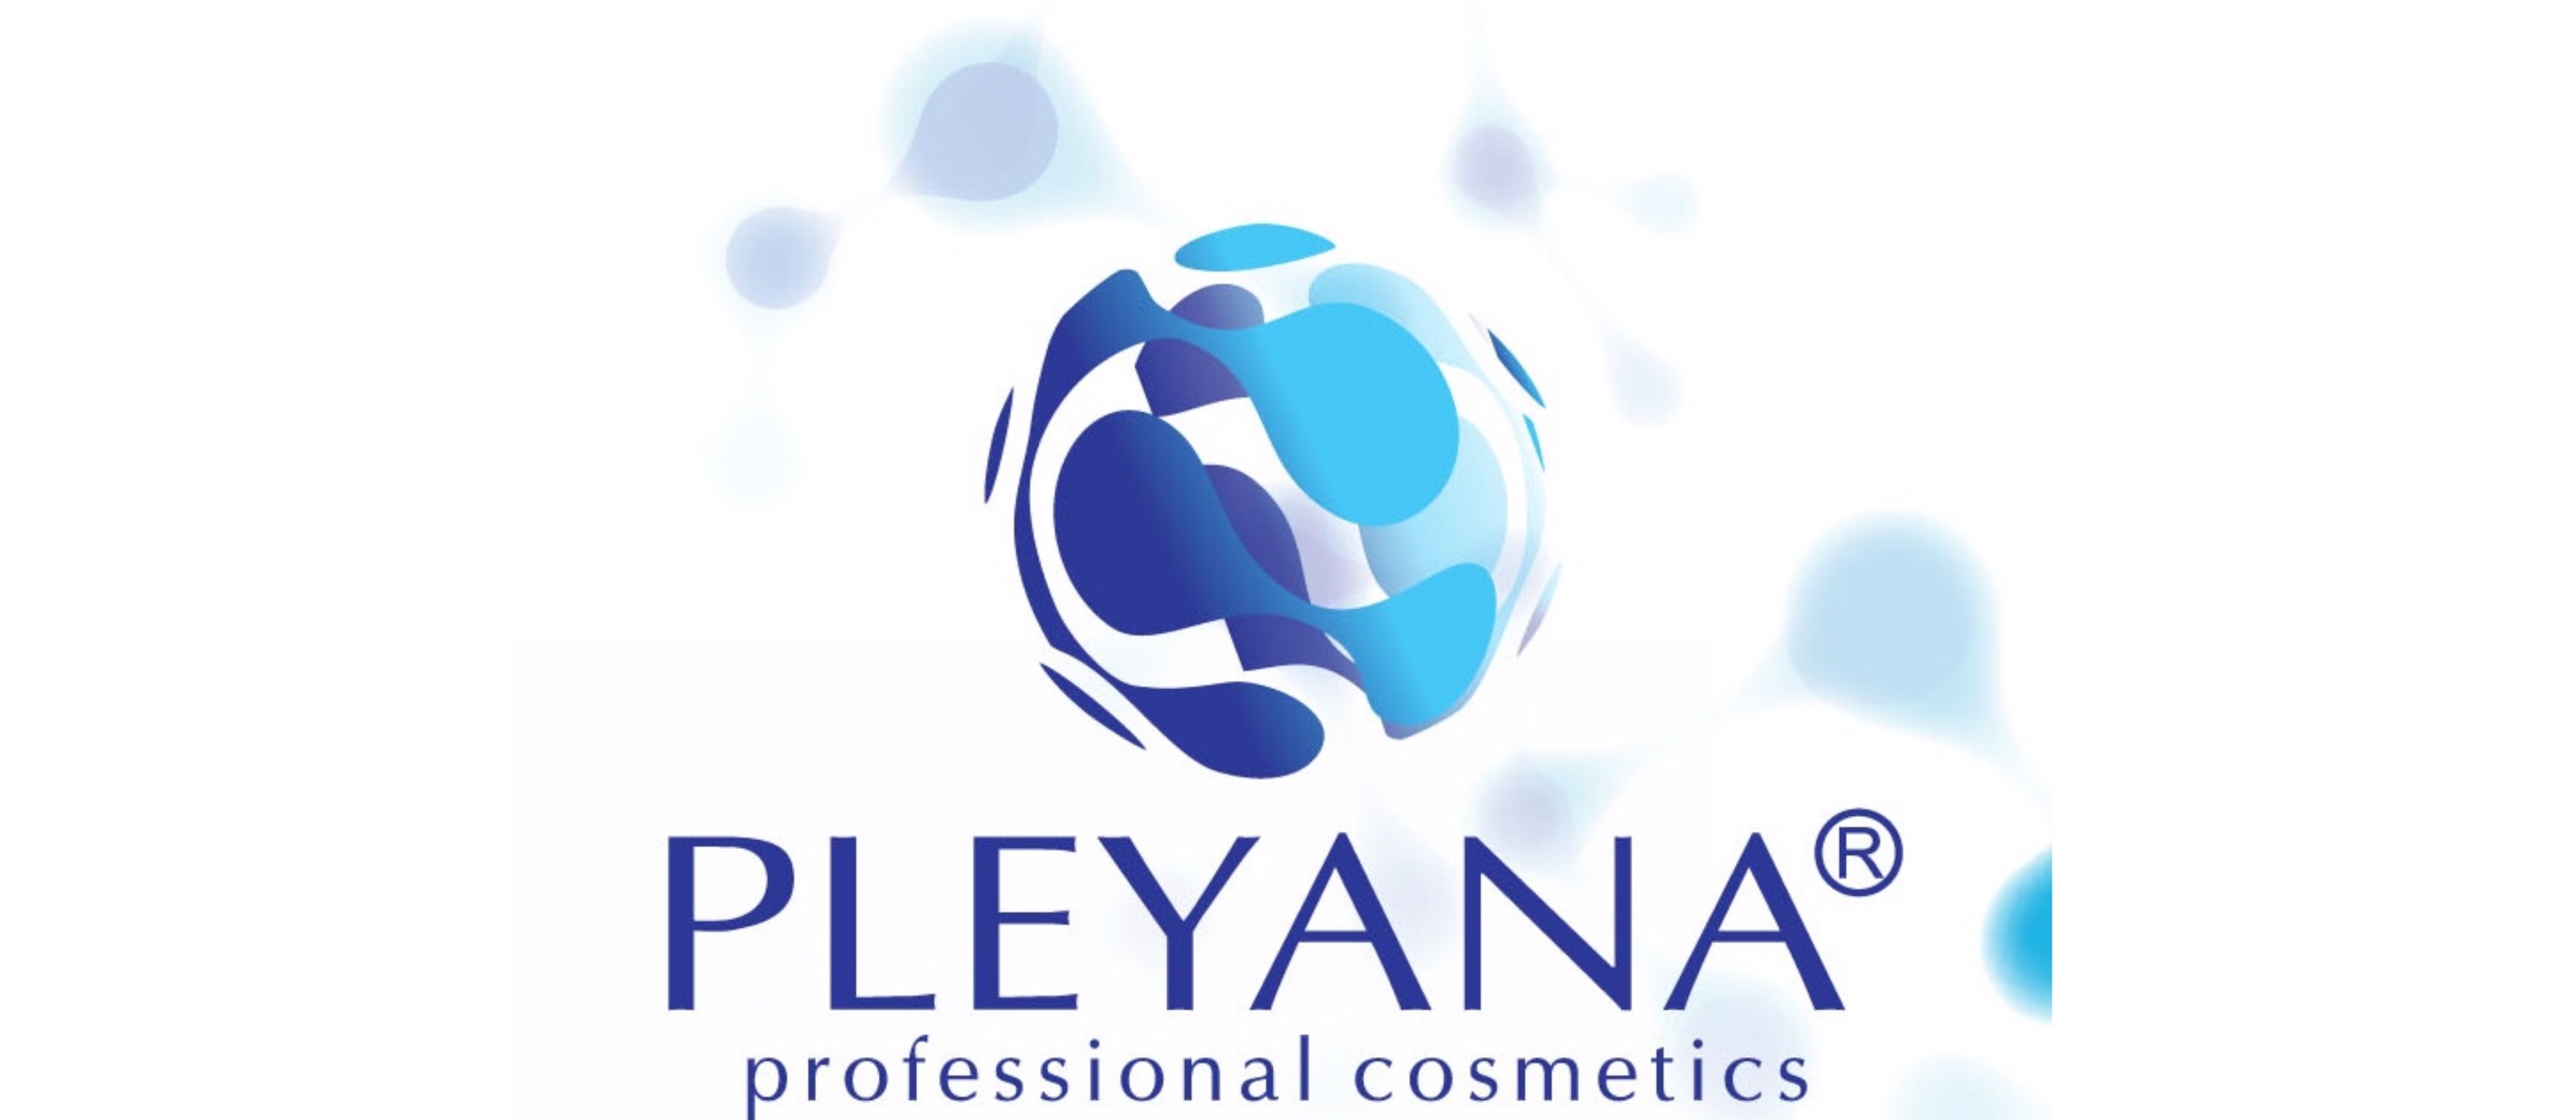 Косметологический бренд Pleyana